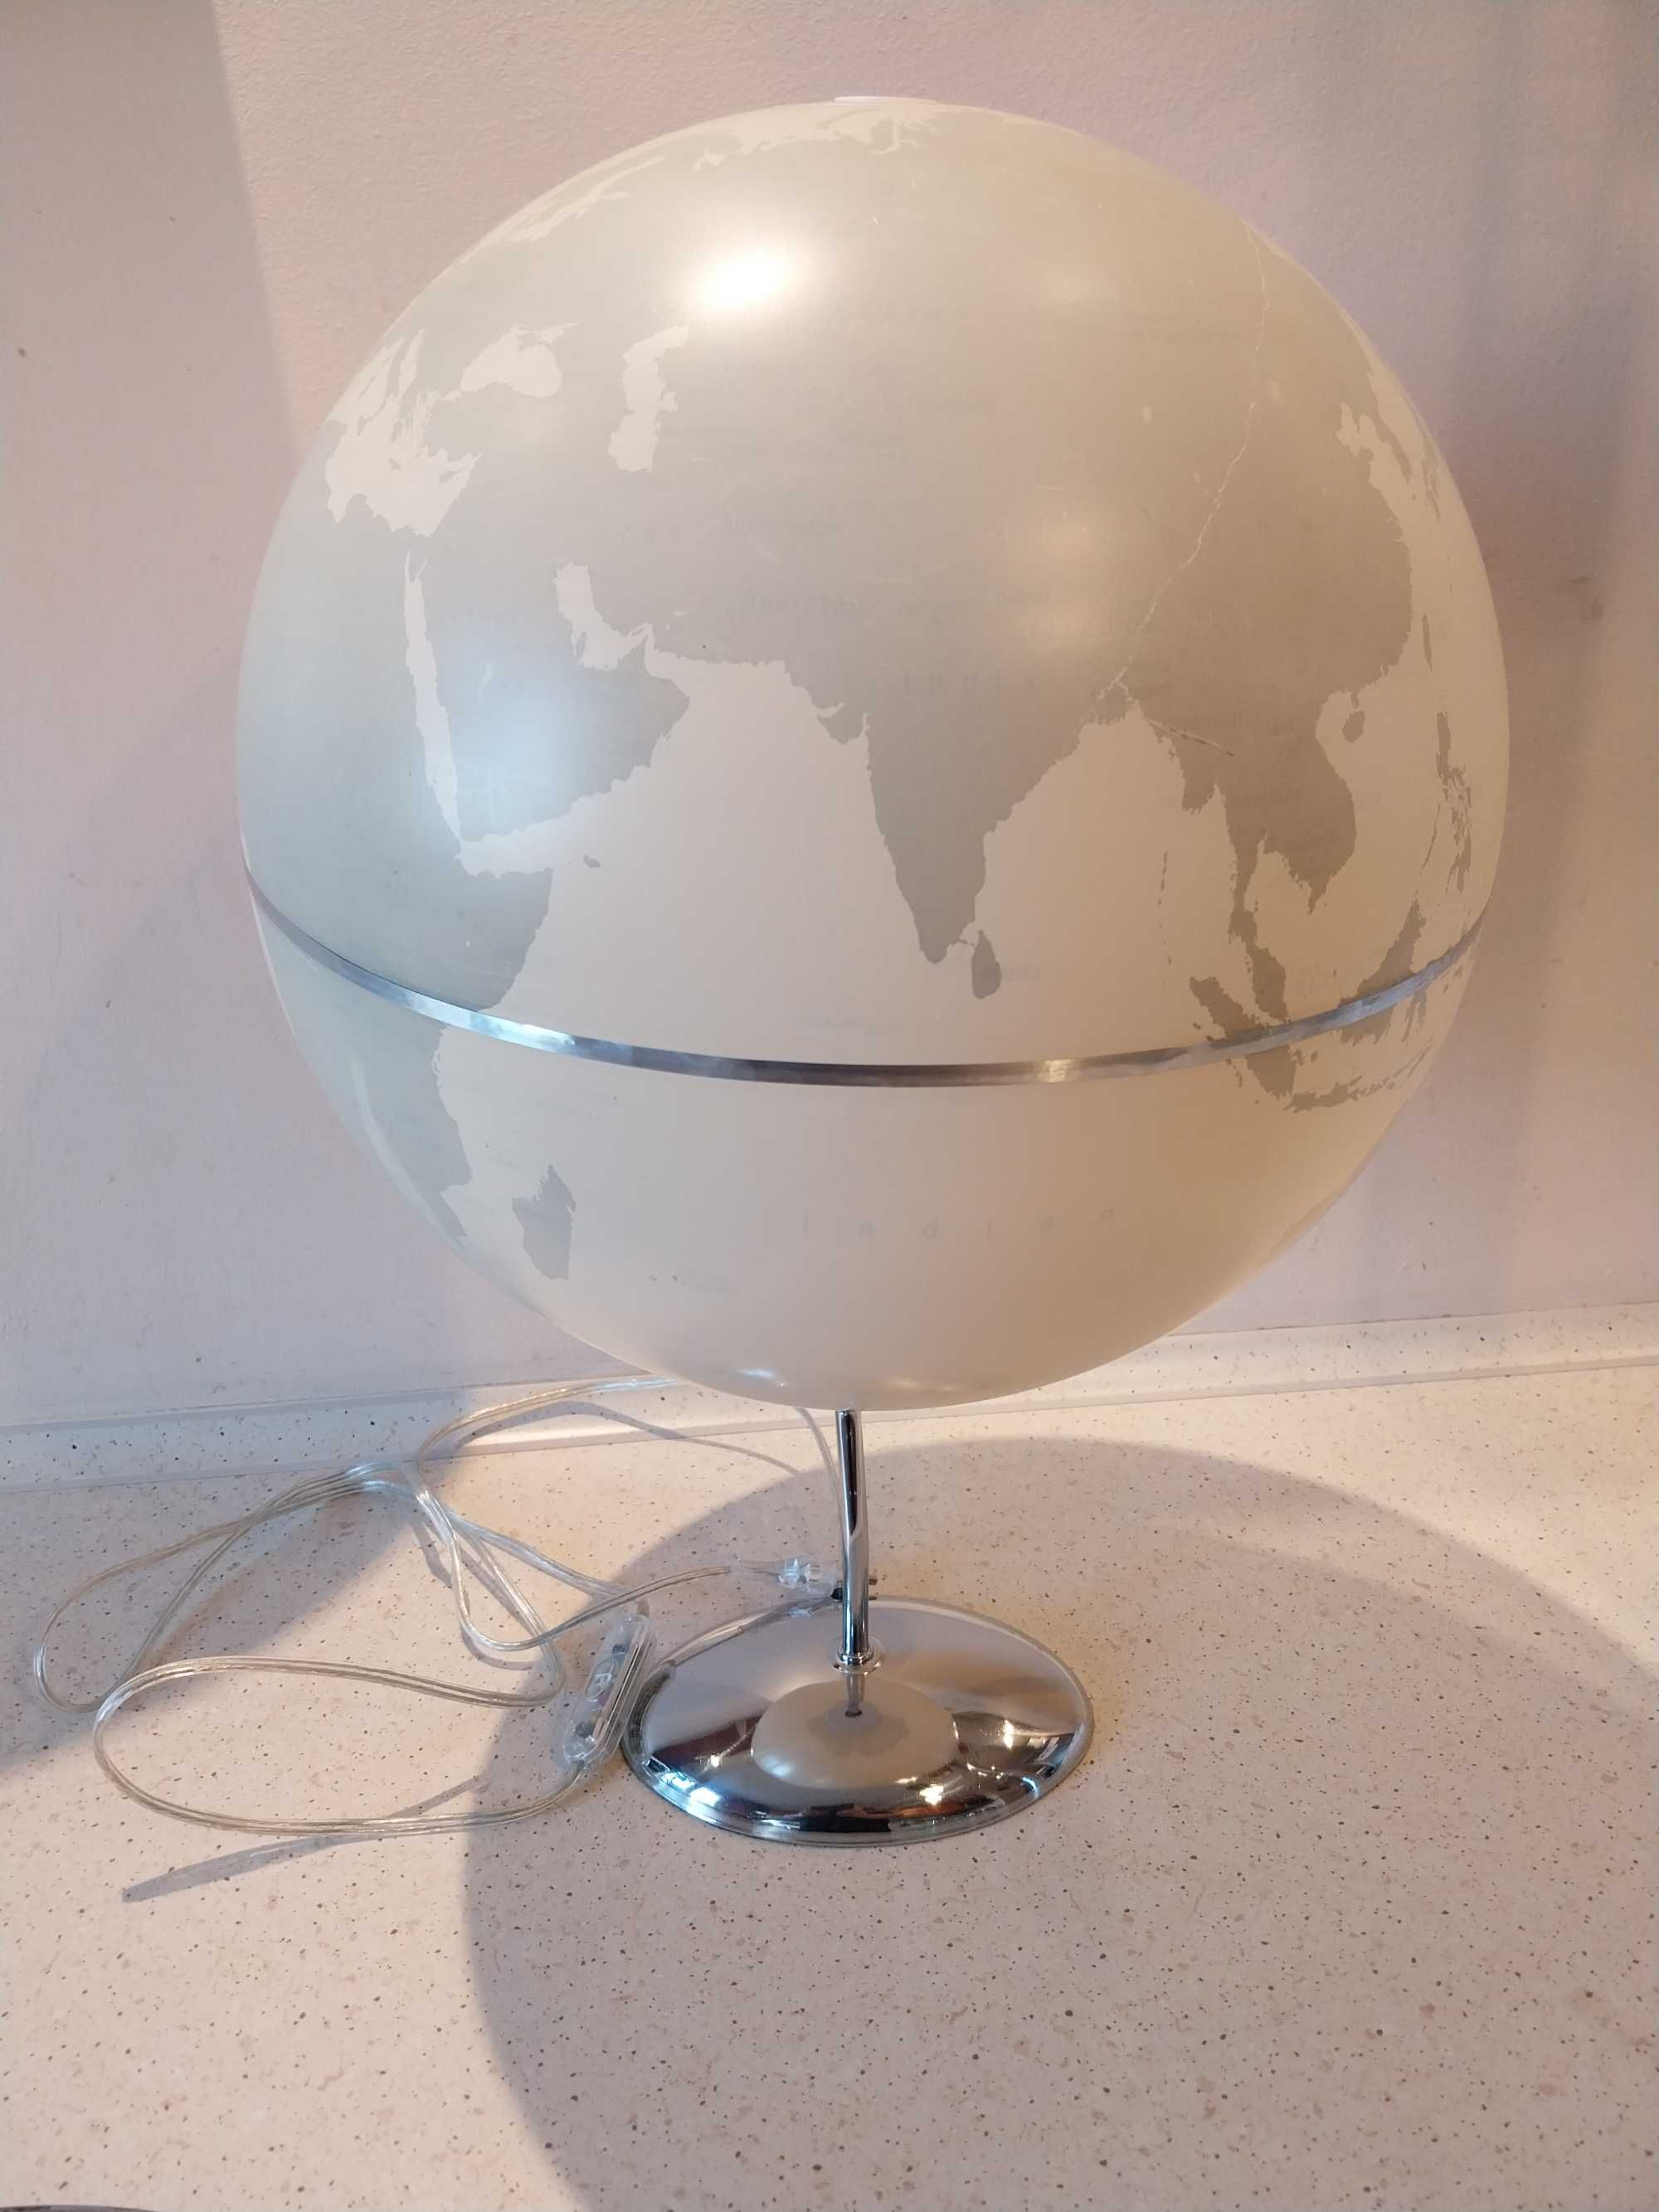 Lampa table columbus 70s devign globe regulacja jasności